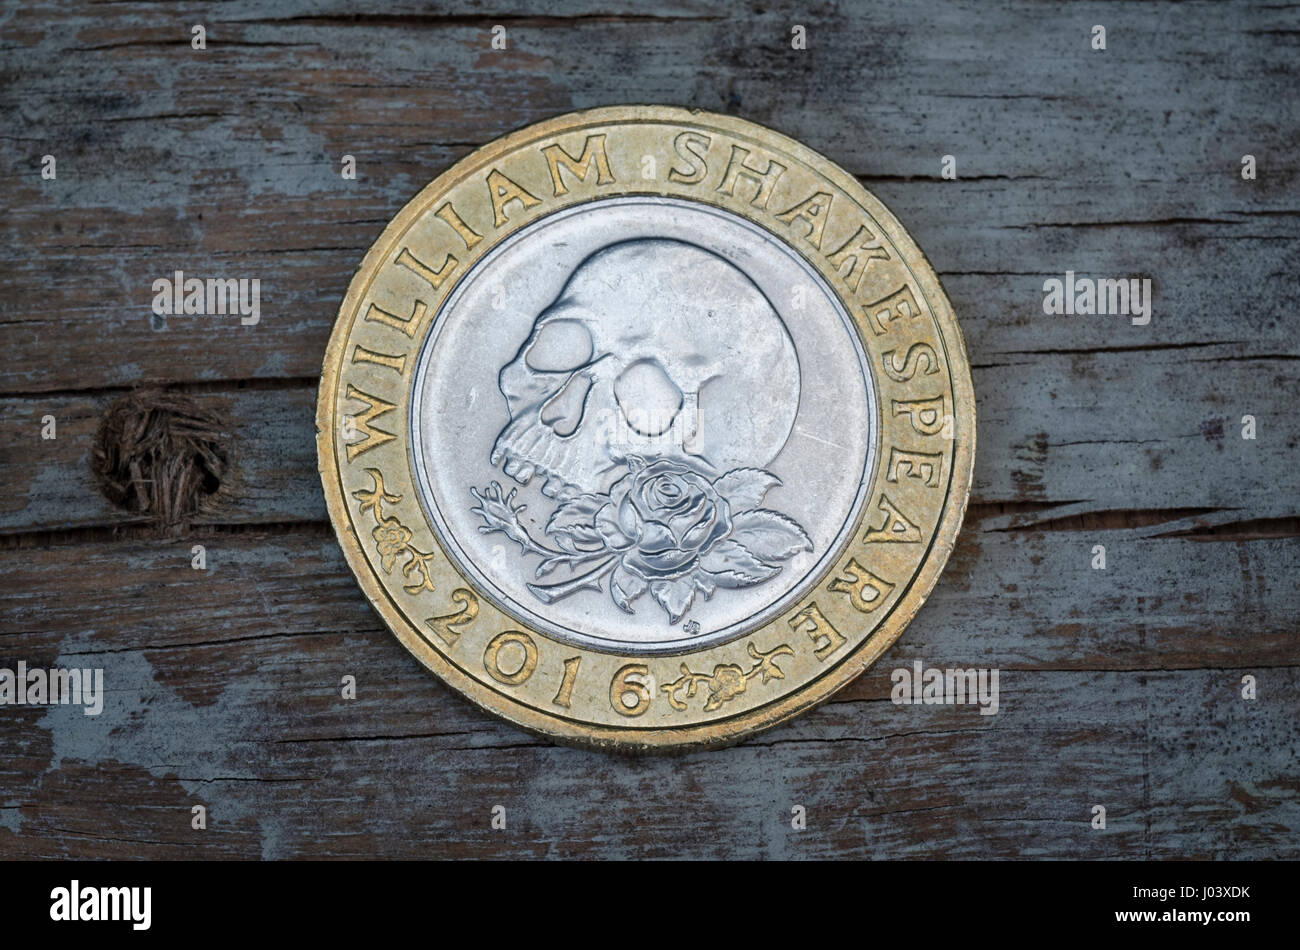 William Shakespeare quattrocentesimo anniversario due Pound moneta introdotta nel 2016. Foto Stock